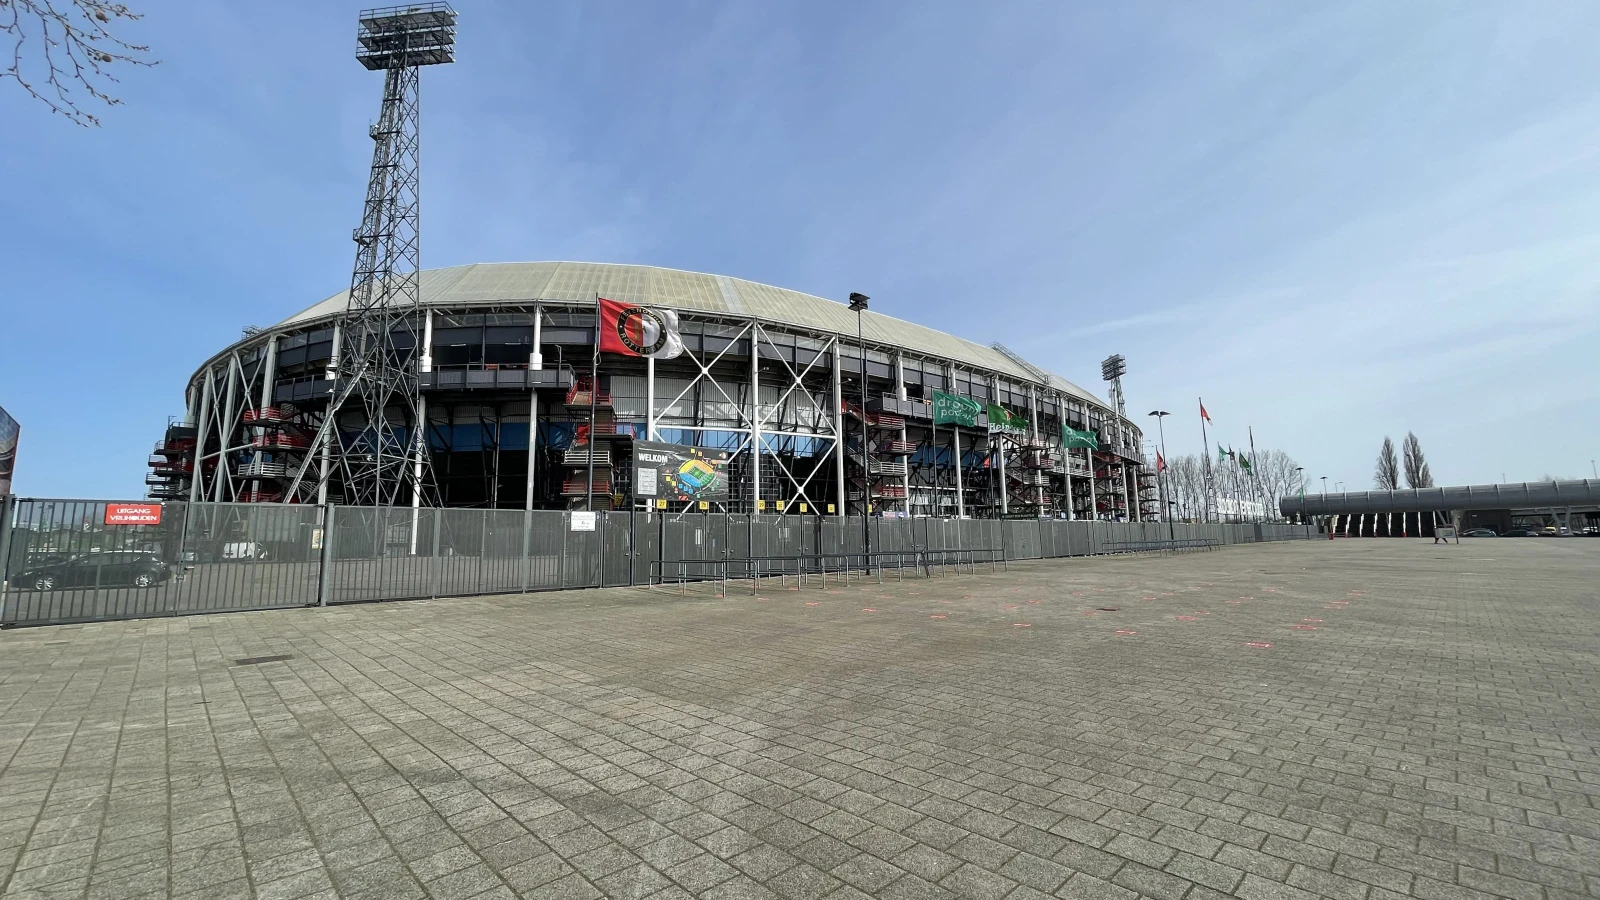 Havenondernemer wil ver gaan voor publiekslieveling: 'De bal ligt bij Feyenoord'